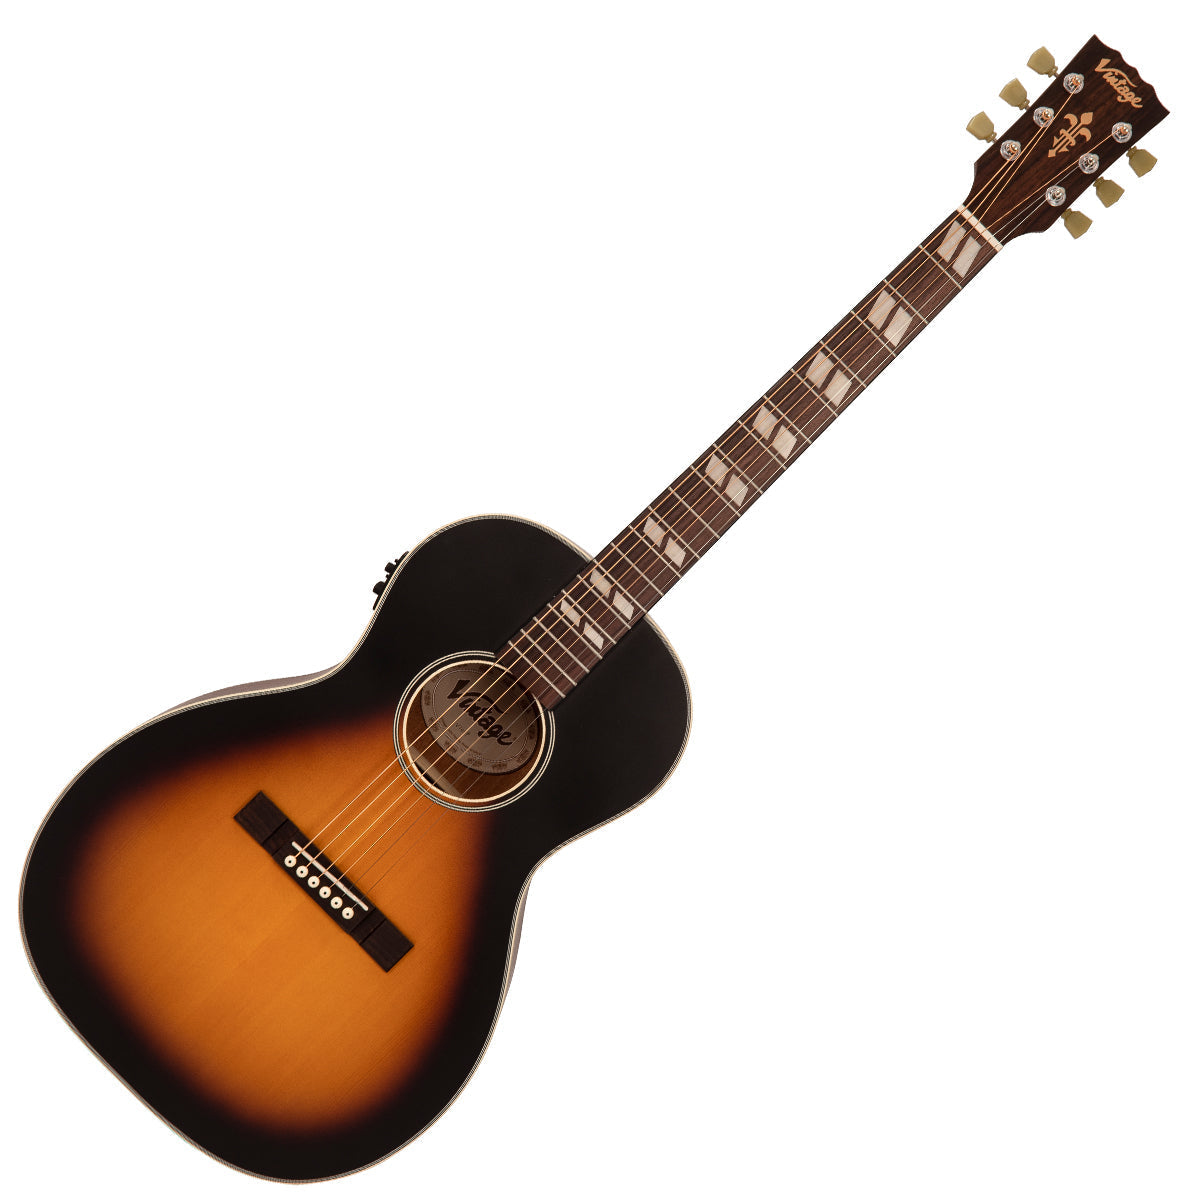 Vintage Historic Series 'Parlour' Electro-Acoustic Guitar ~ Vintage Sunburst, Electro Acoustic Guitar for sale at Richards Guitars.